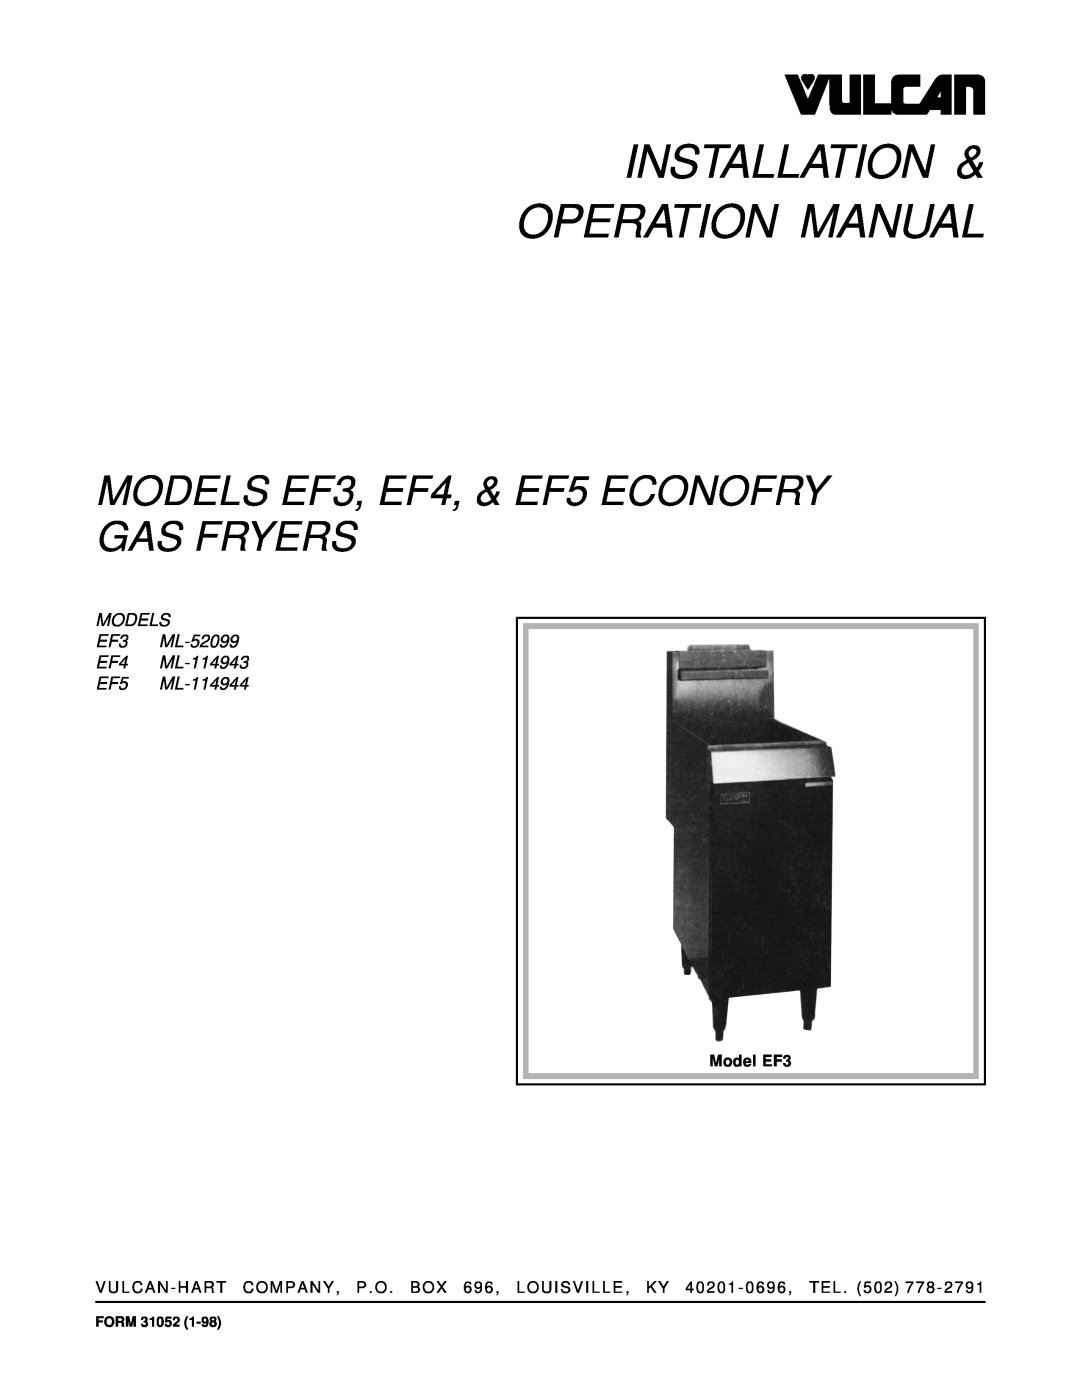 Vulcan-Hart EF4 ML-114943, EF5 ML-114944 service manual Service Manual, Ef Series Standard And Filter-Ready Gas Fryers 